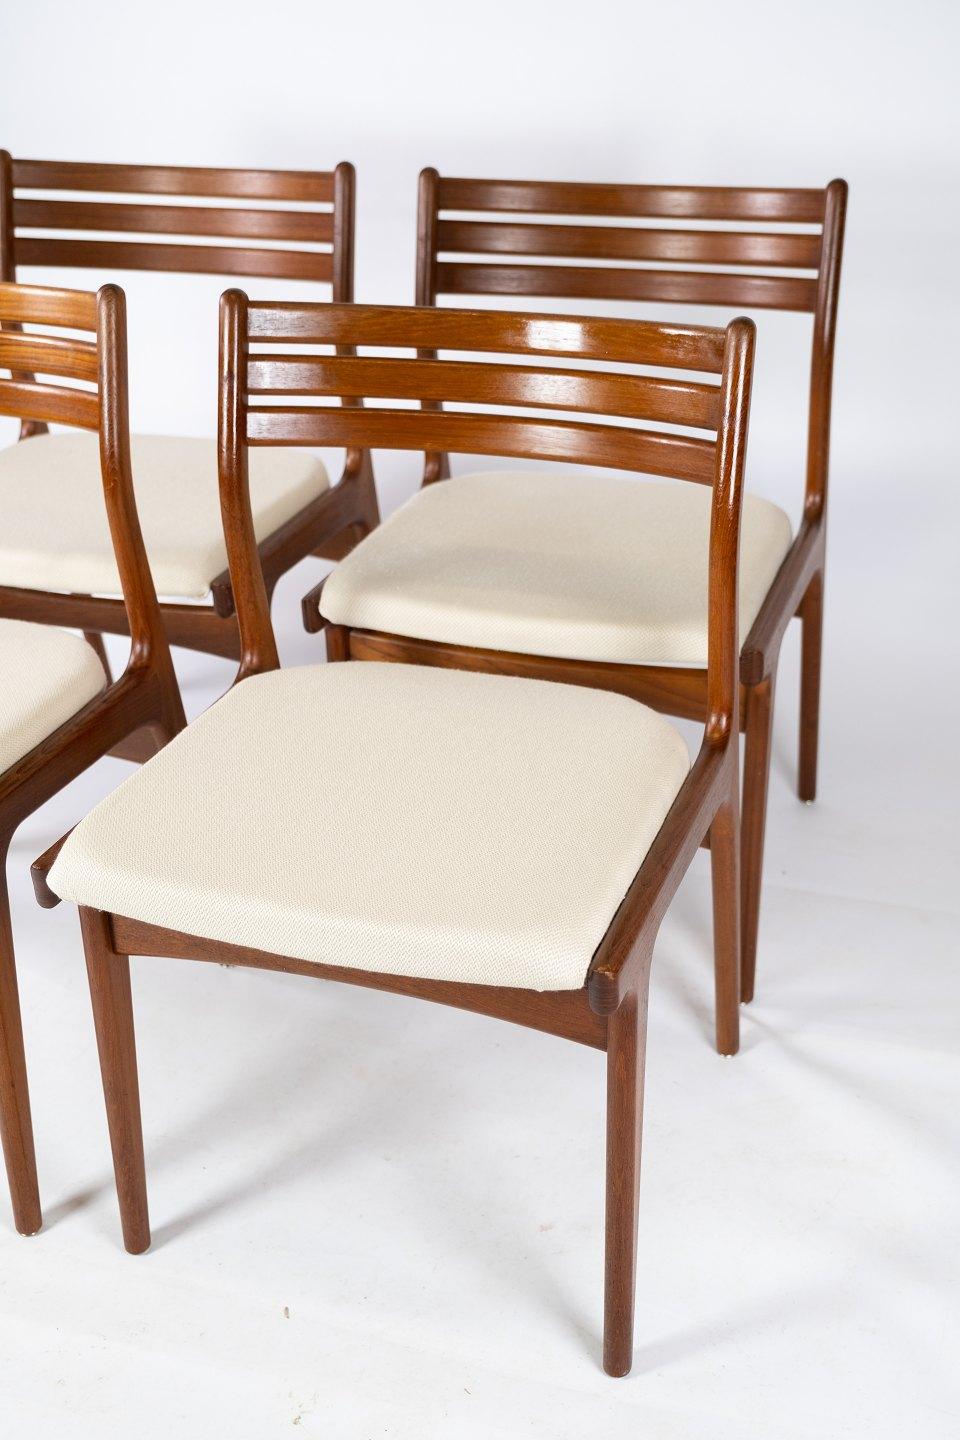 Scandinavian Modern Set of Four Dining Room Chairs in Teak of Danish Design, 1960s For Sale